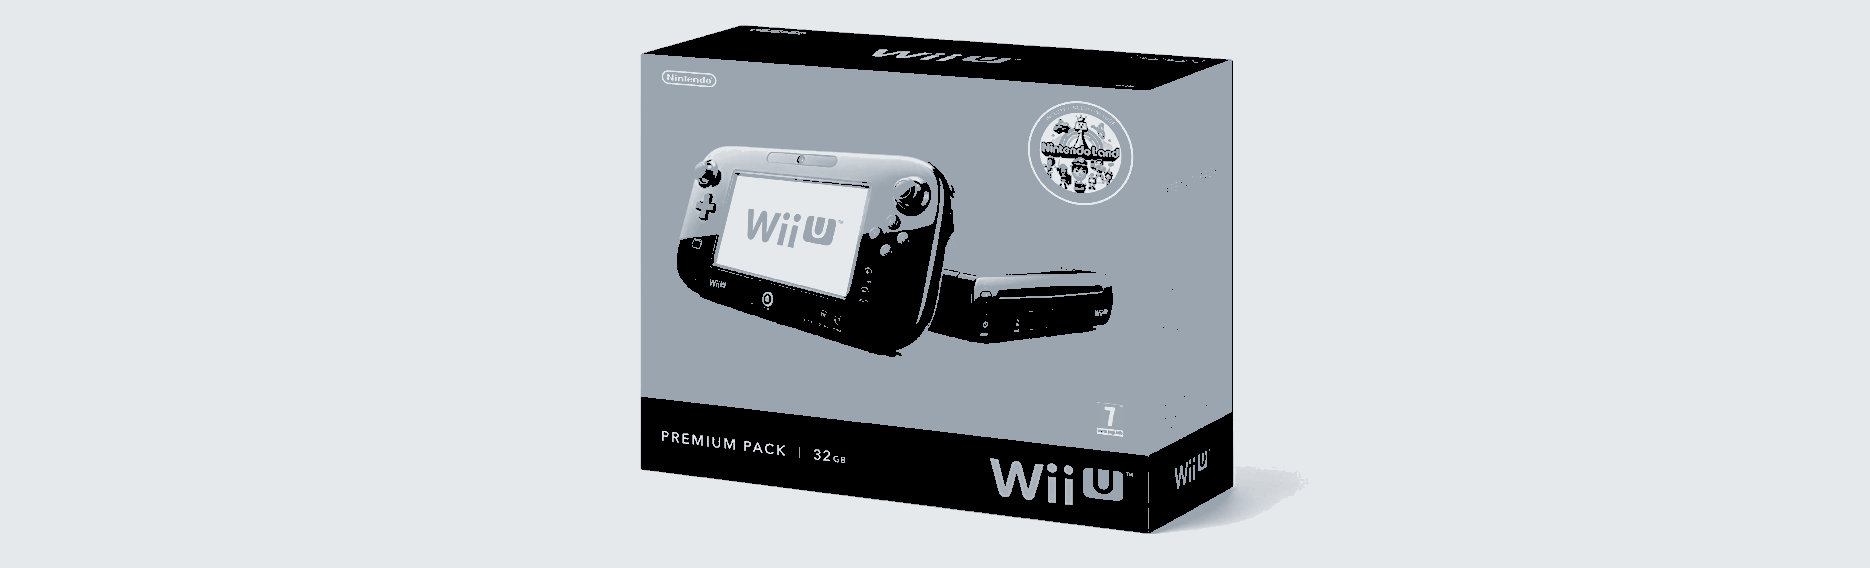 Tutorial no oficial Wii U